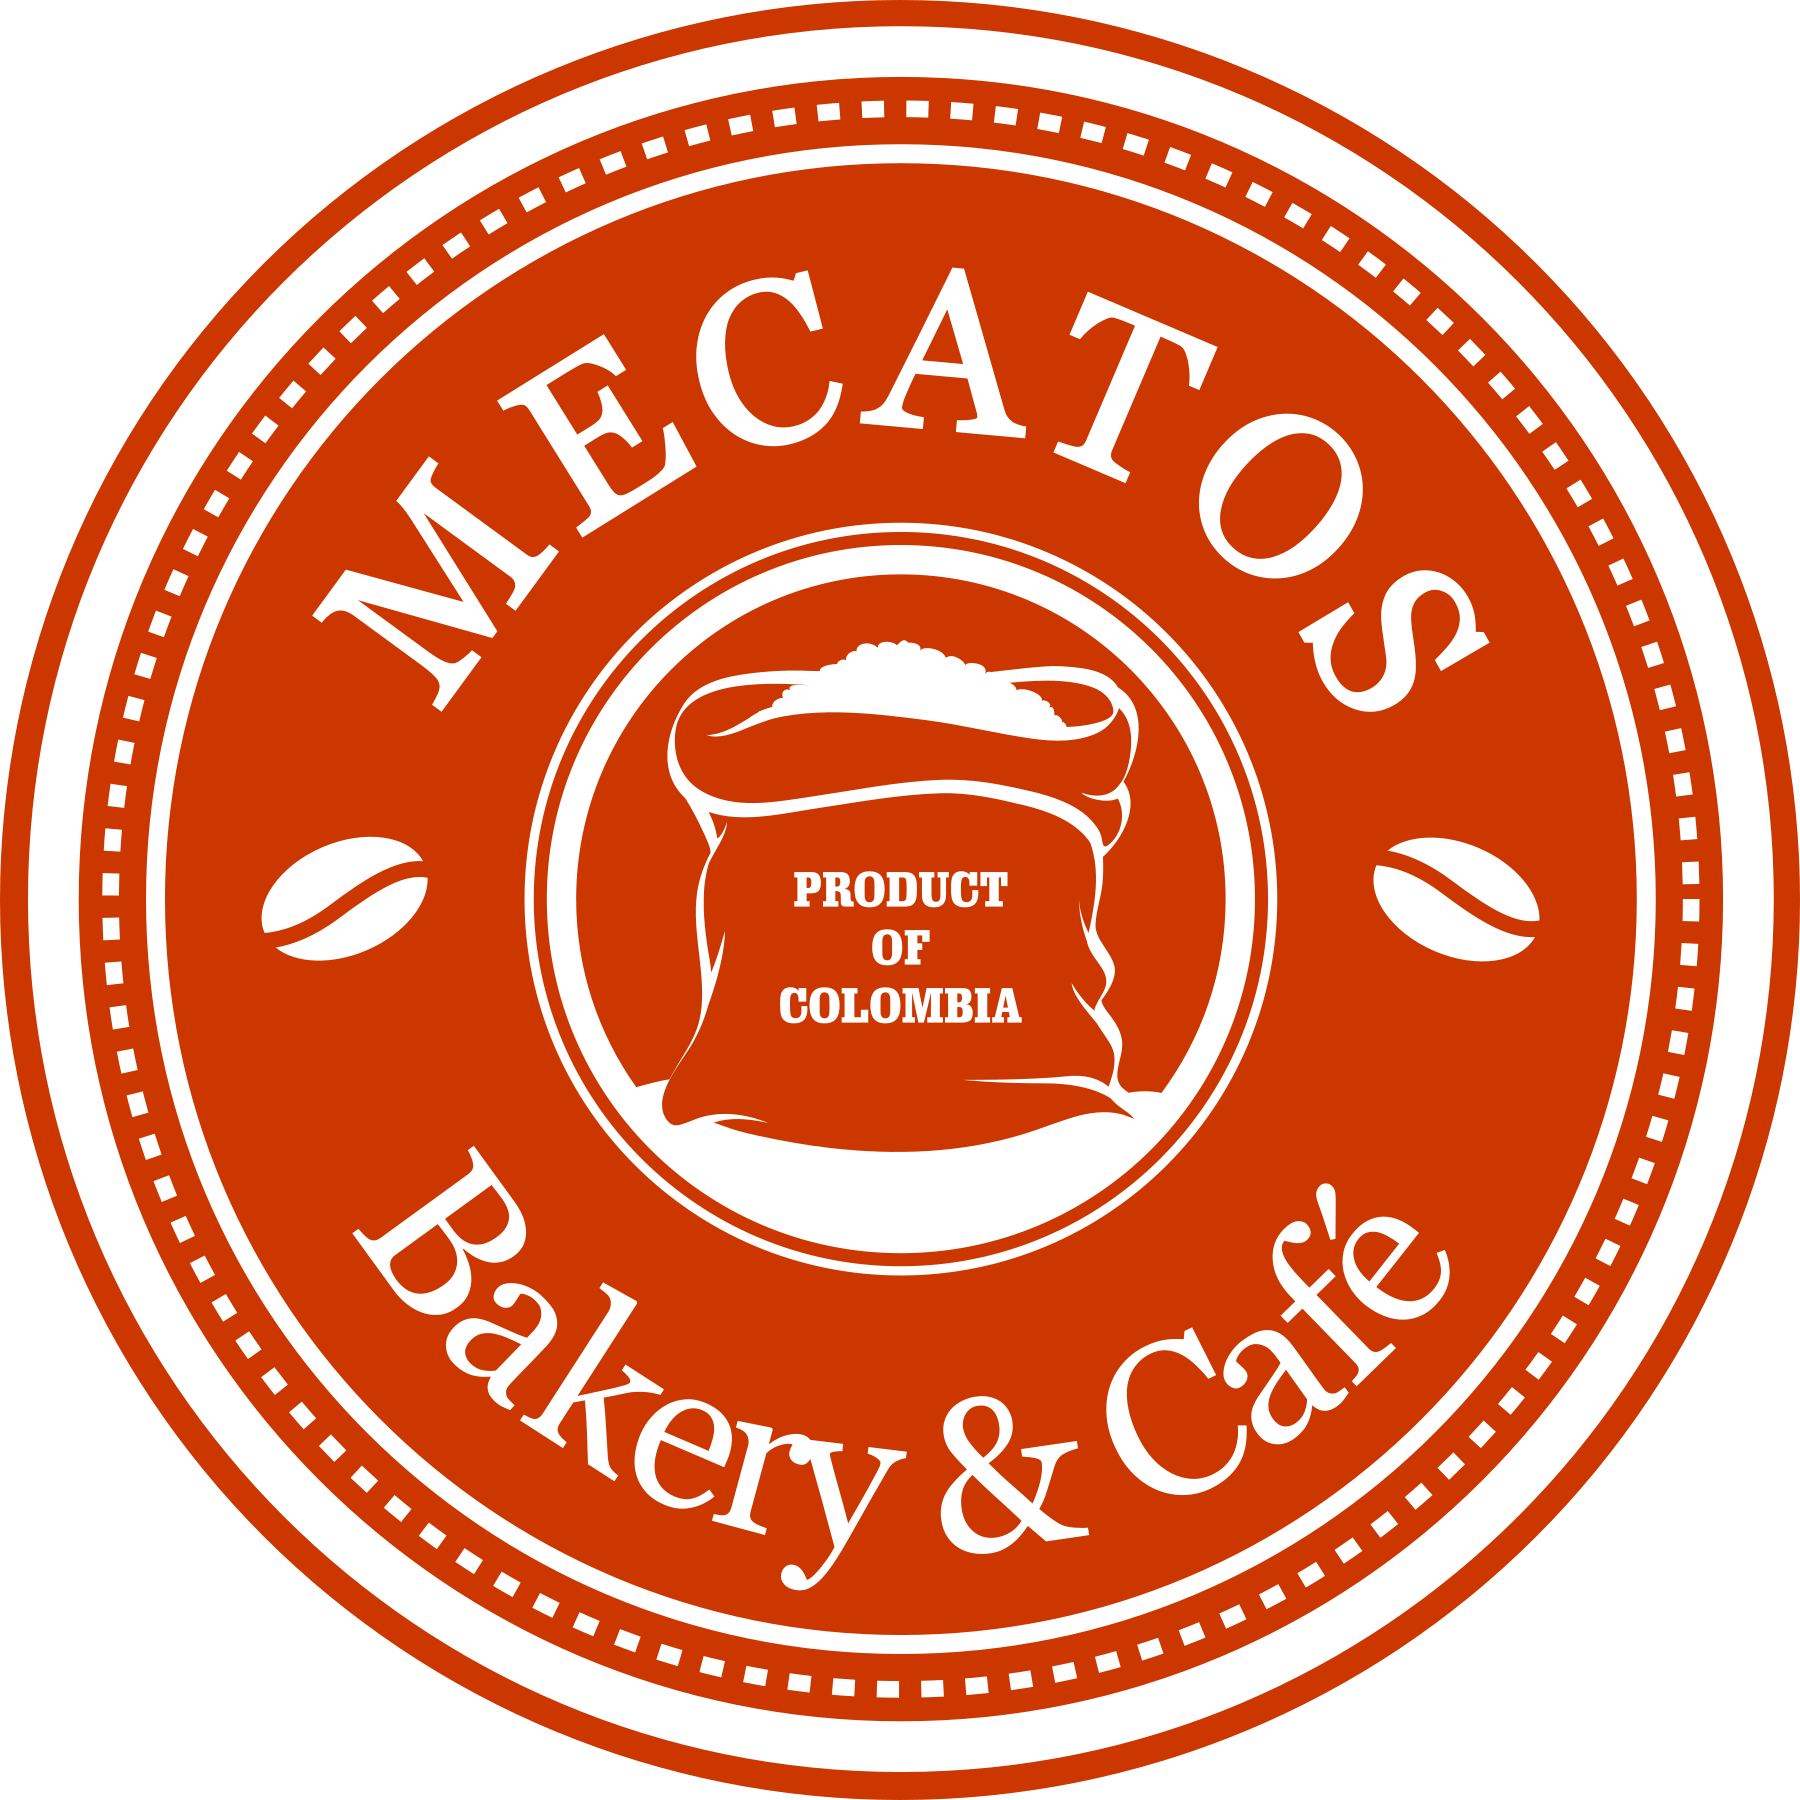 Mecatos Bakery & Café